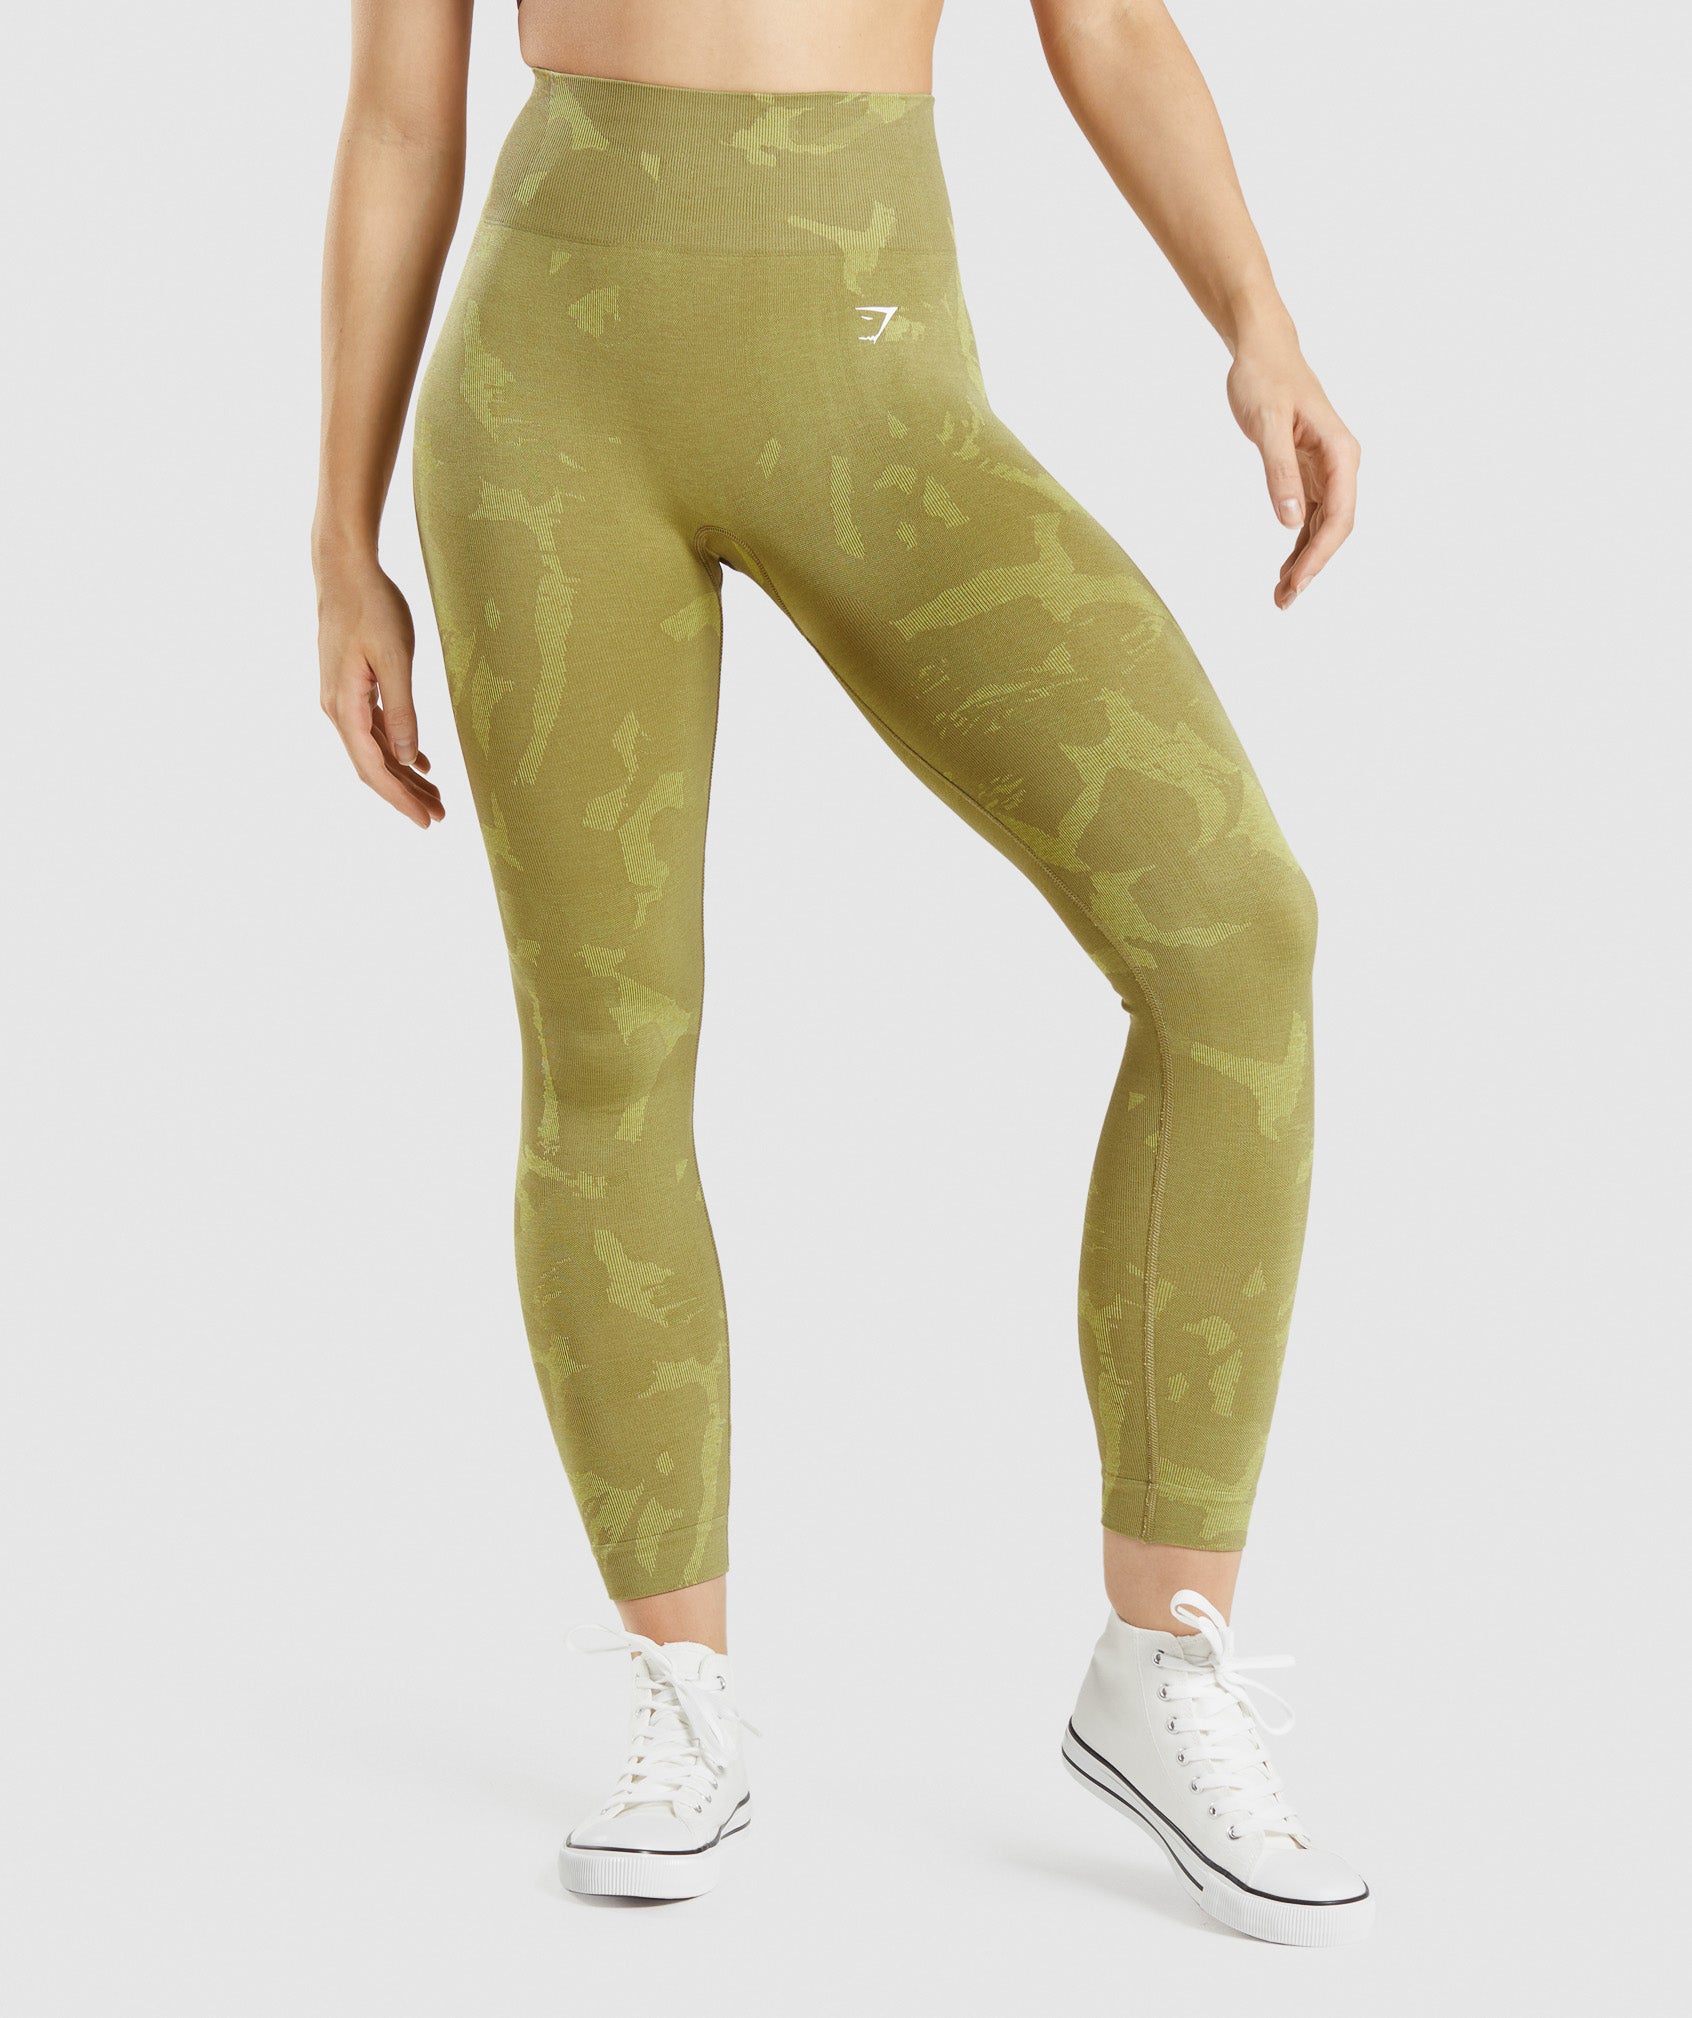 Women's training shorts Gymshark Adapt Camo Savanna Seamless green